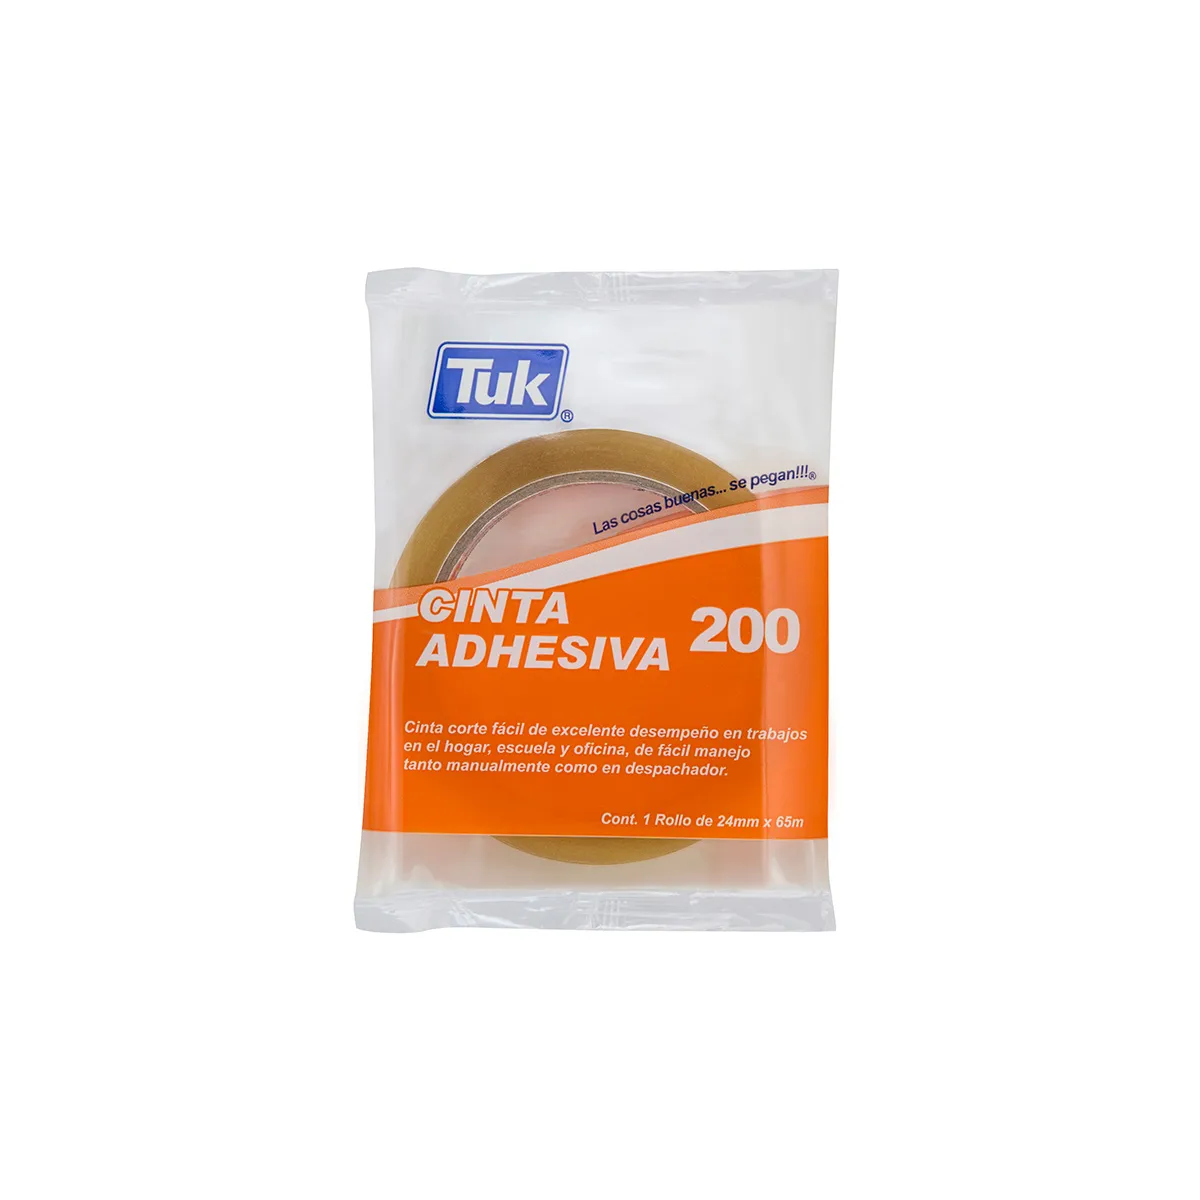 Cinta Adhesiva Tuk 200 24X65 Transparente Poliprop 260010